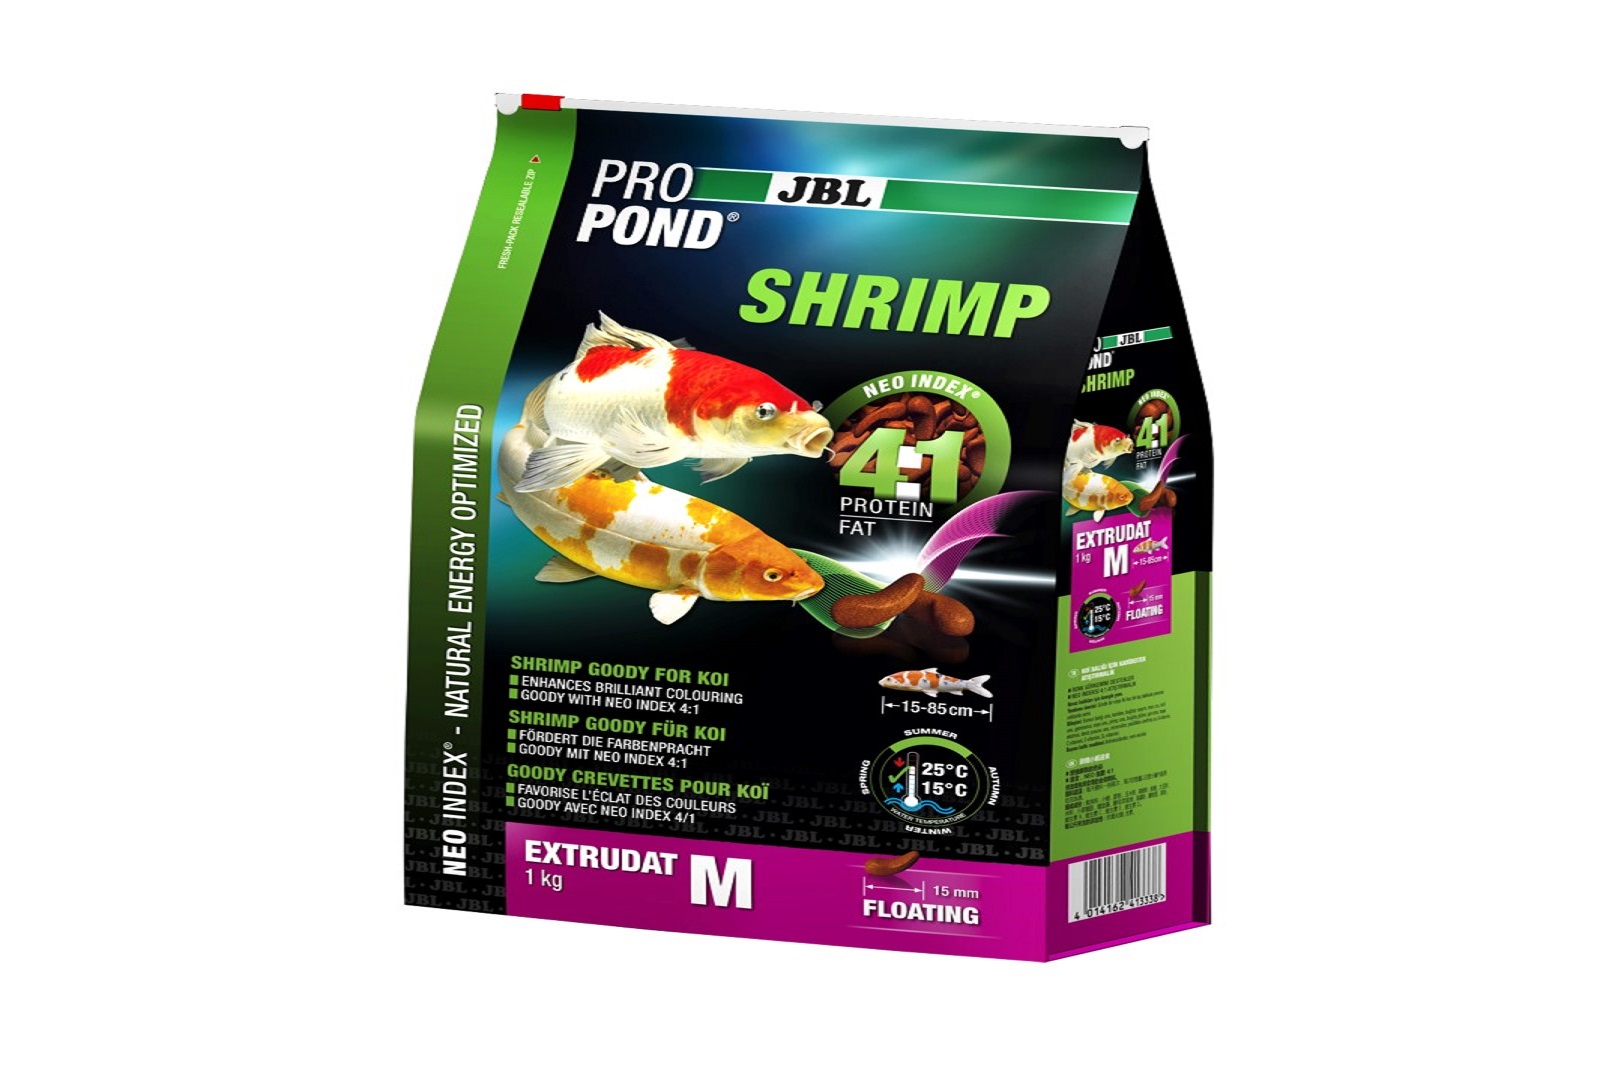 JBL ProPond Shrimp M  Shrimps 1 Kg Leckerbissen für mittlere Koi